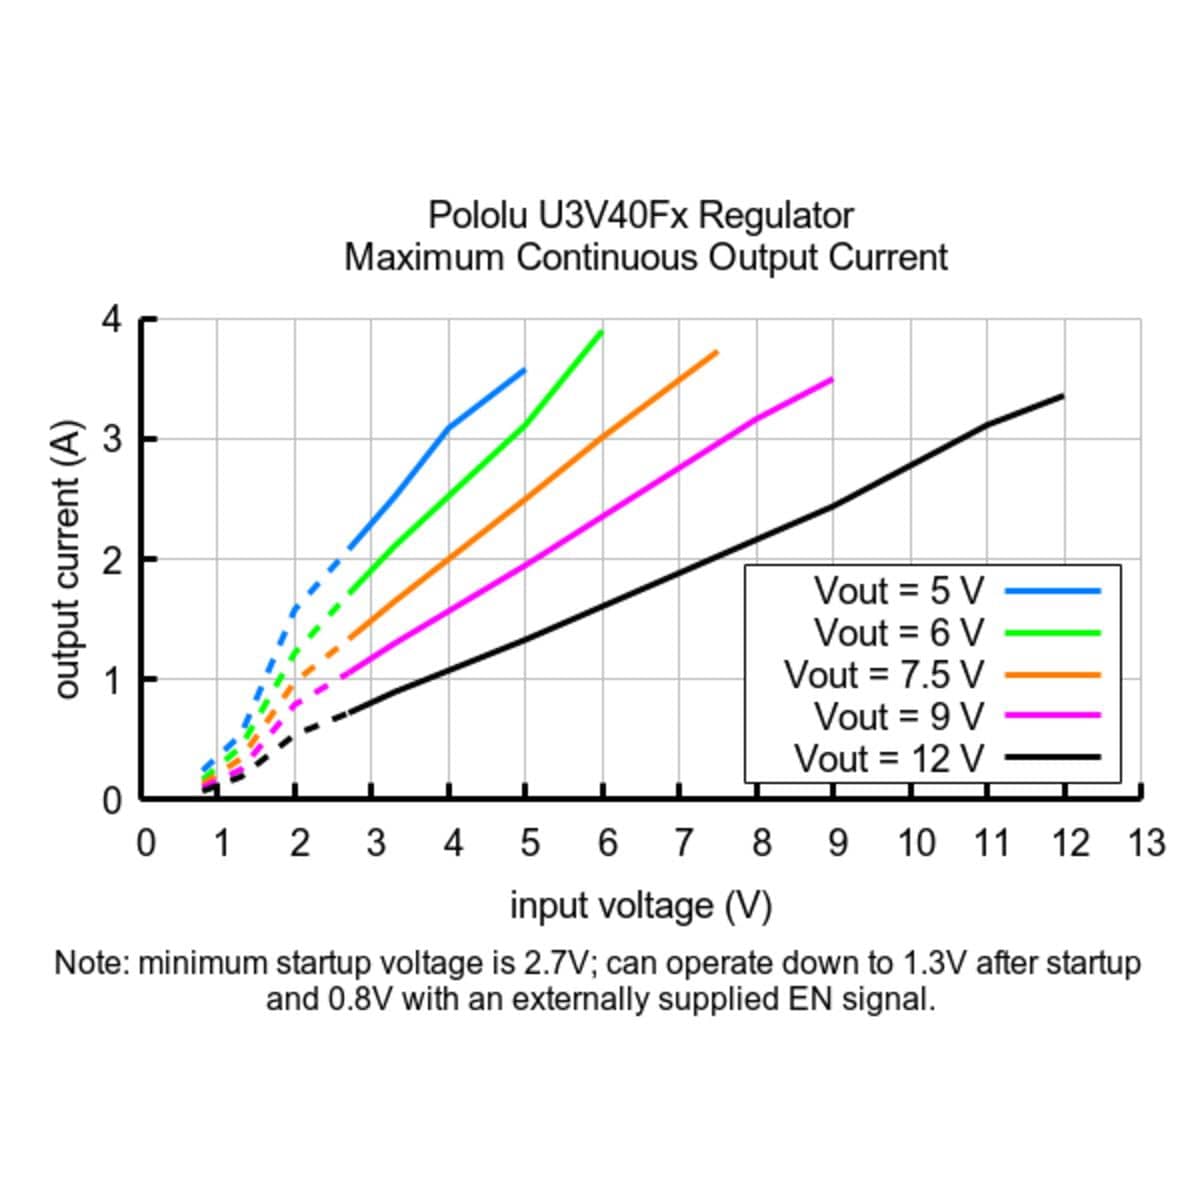 5V Step-Up Voltage Regulator U3V40F5 - The Pi Hut